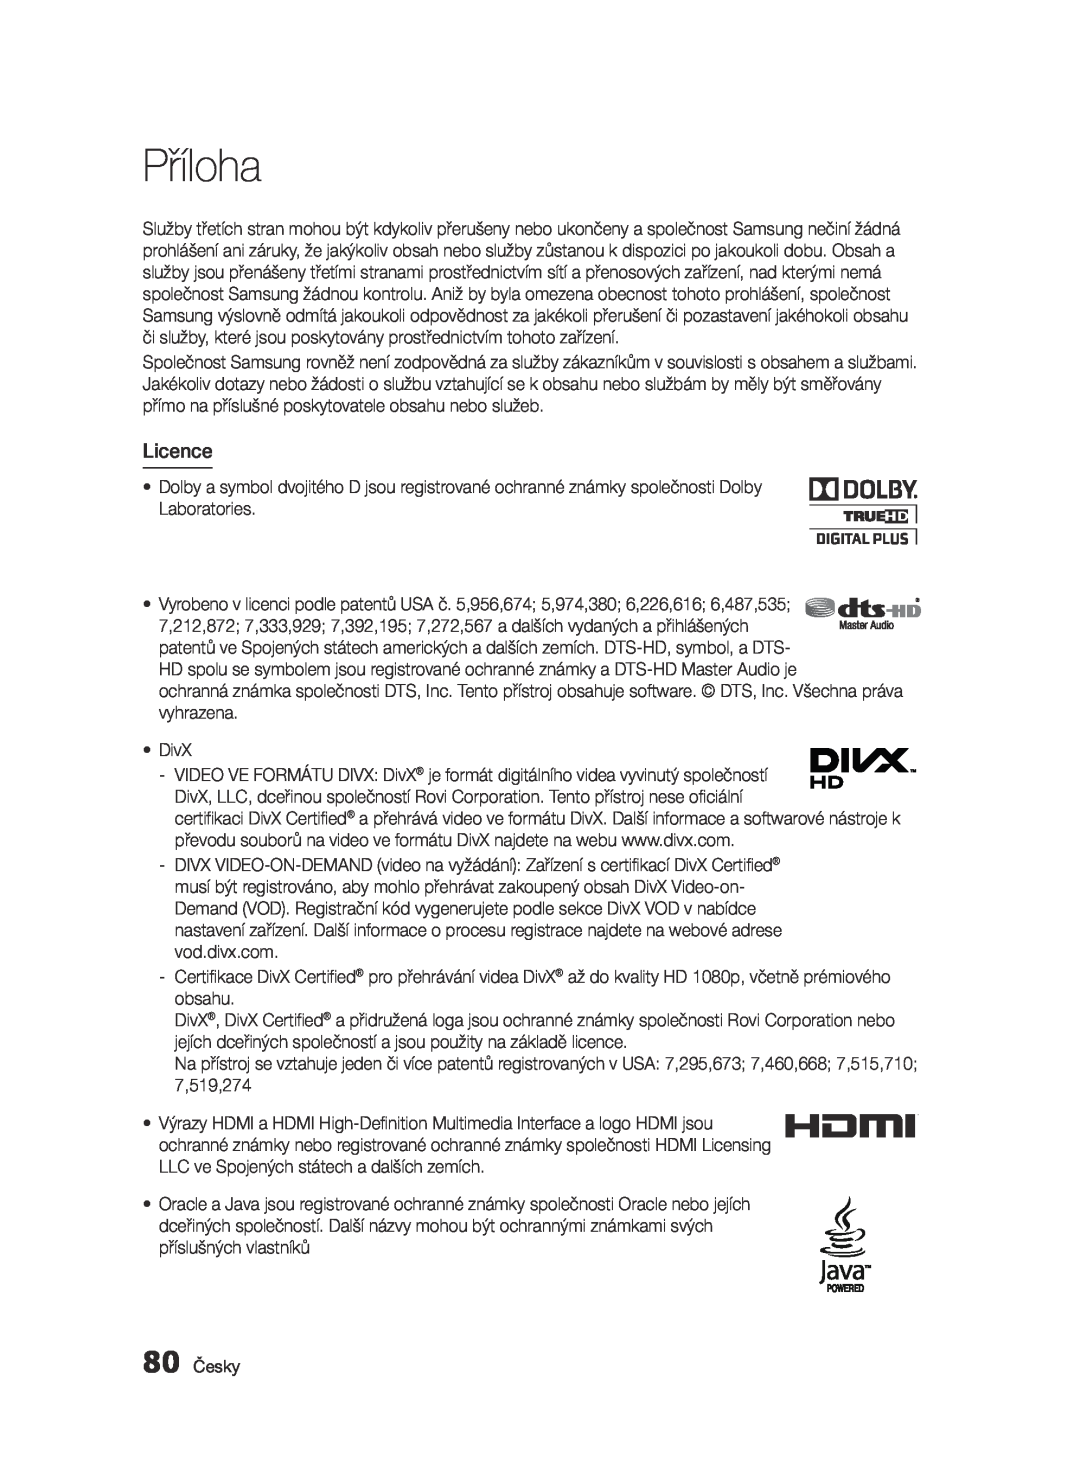 Samsung BD-E6300/EN manual Licence, Příloha 